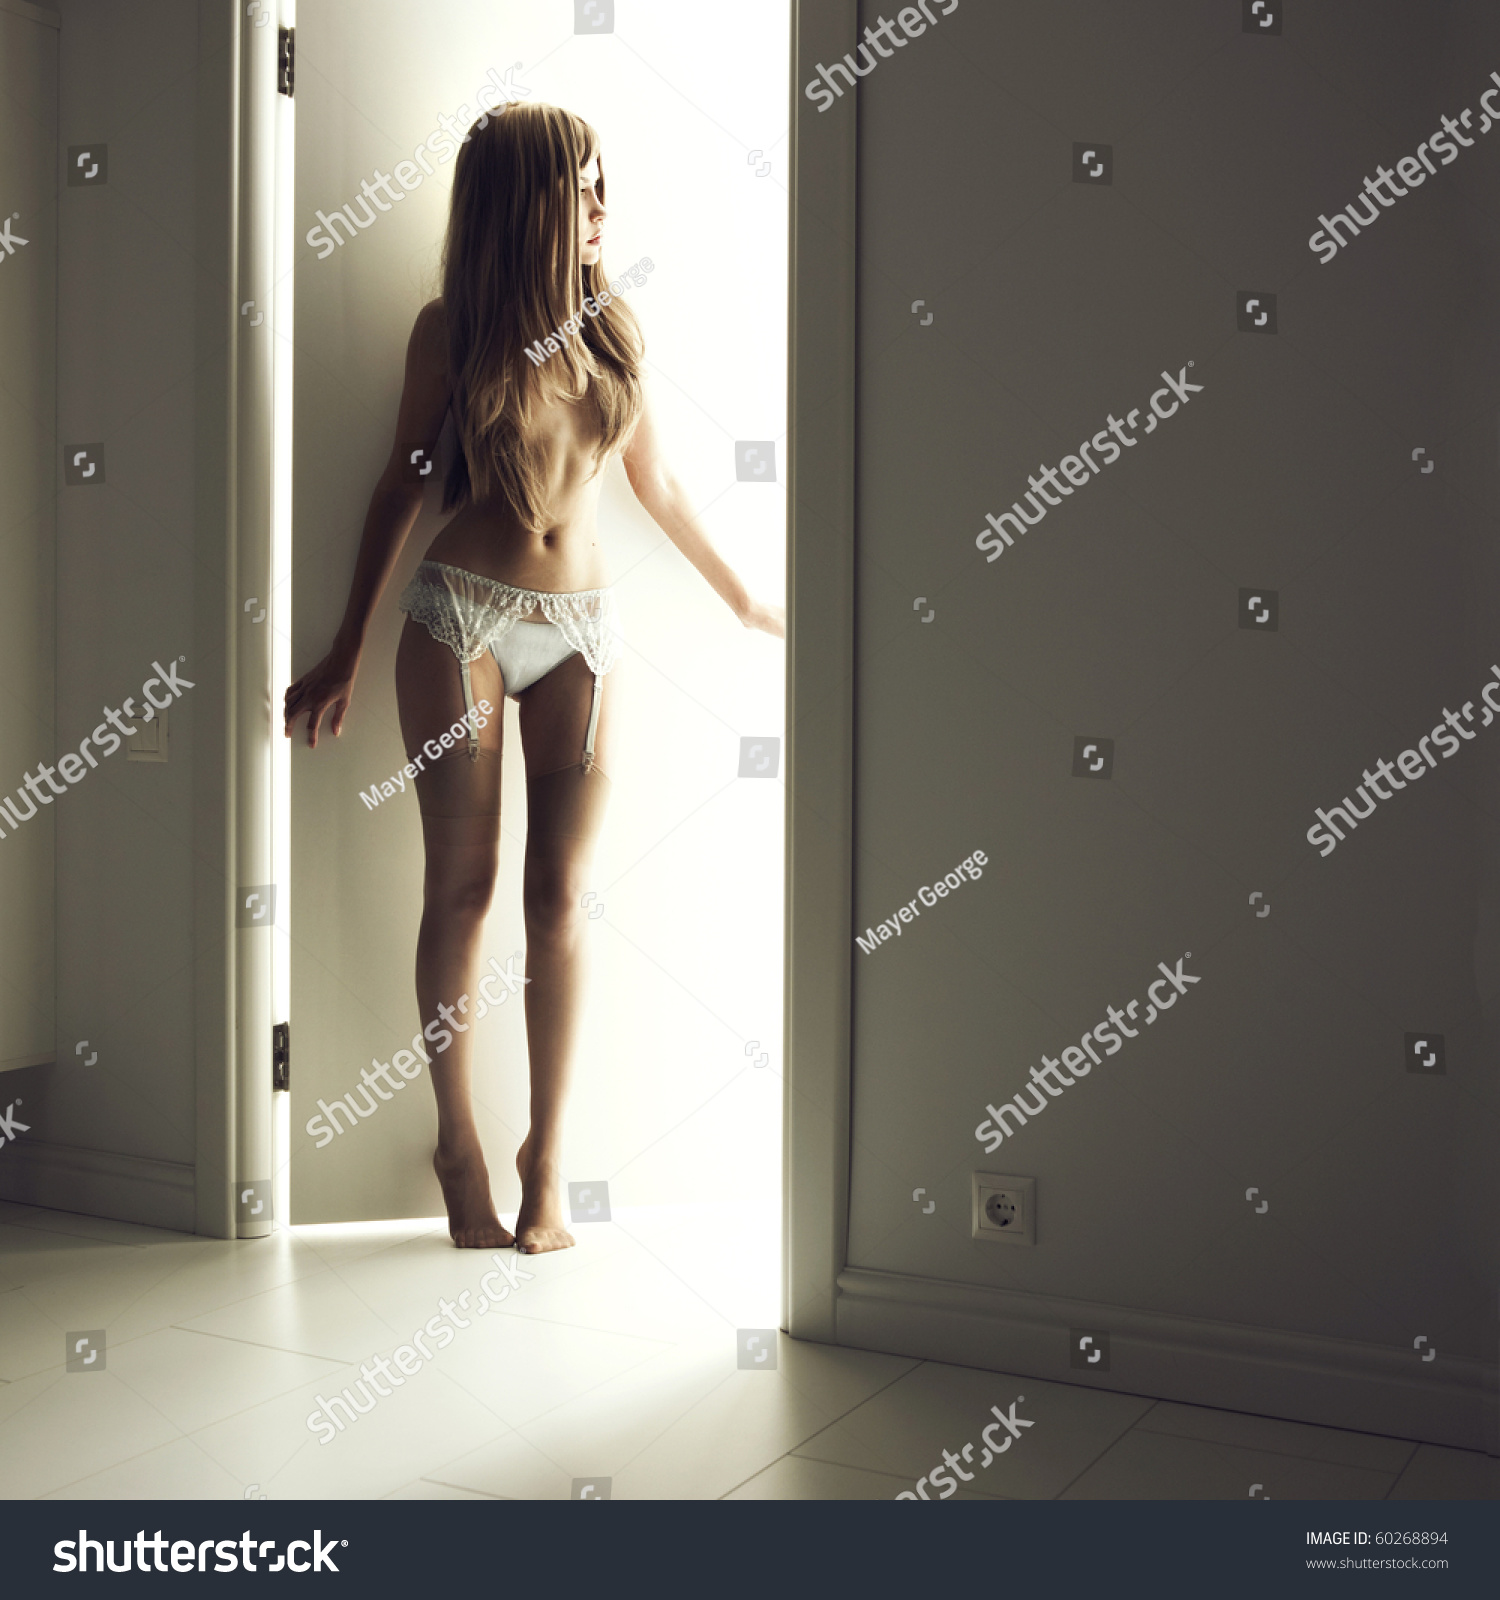 Nude Elegant Woman Luminous Doorway Stock Photo 60268894 Shutterstock.